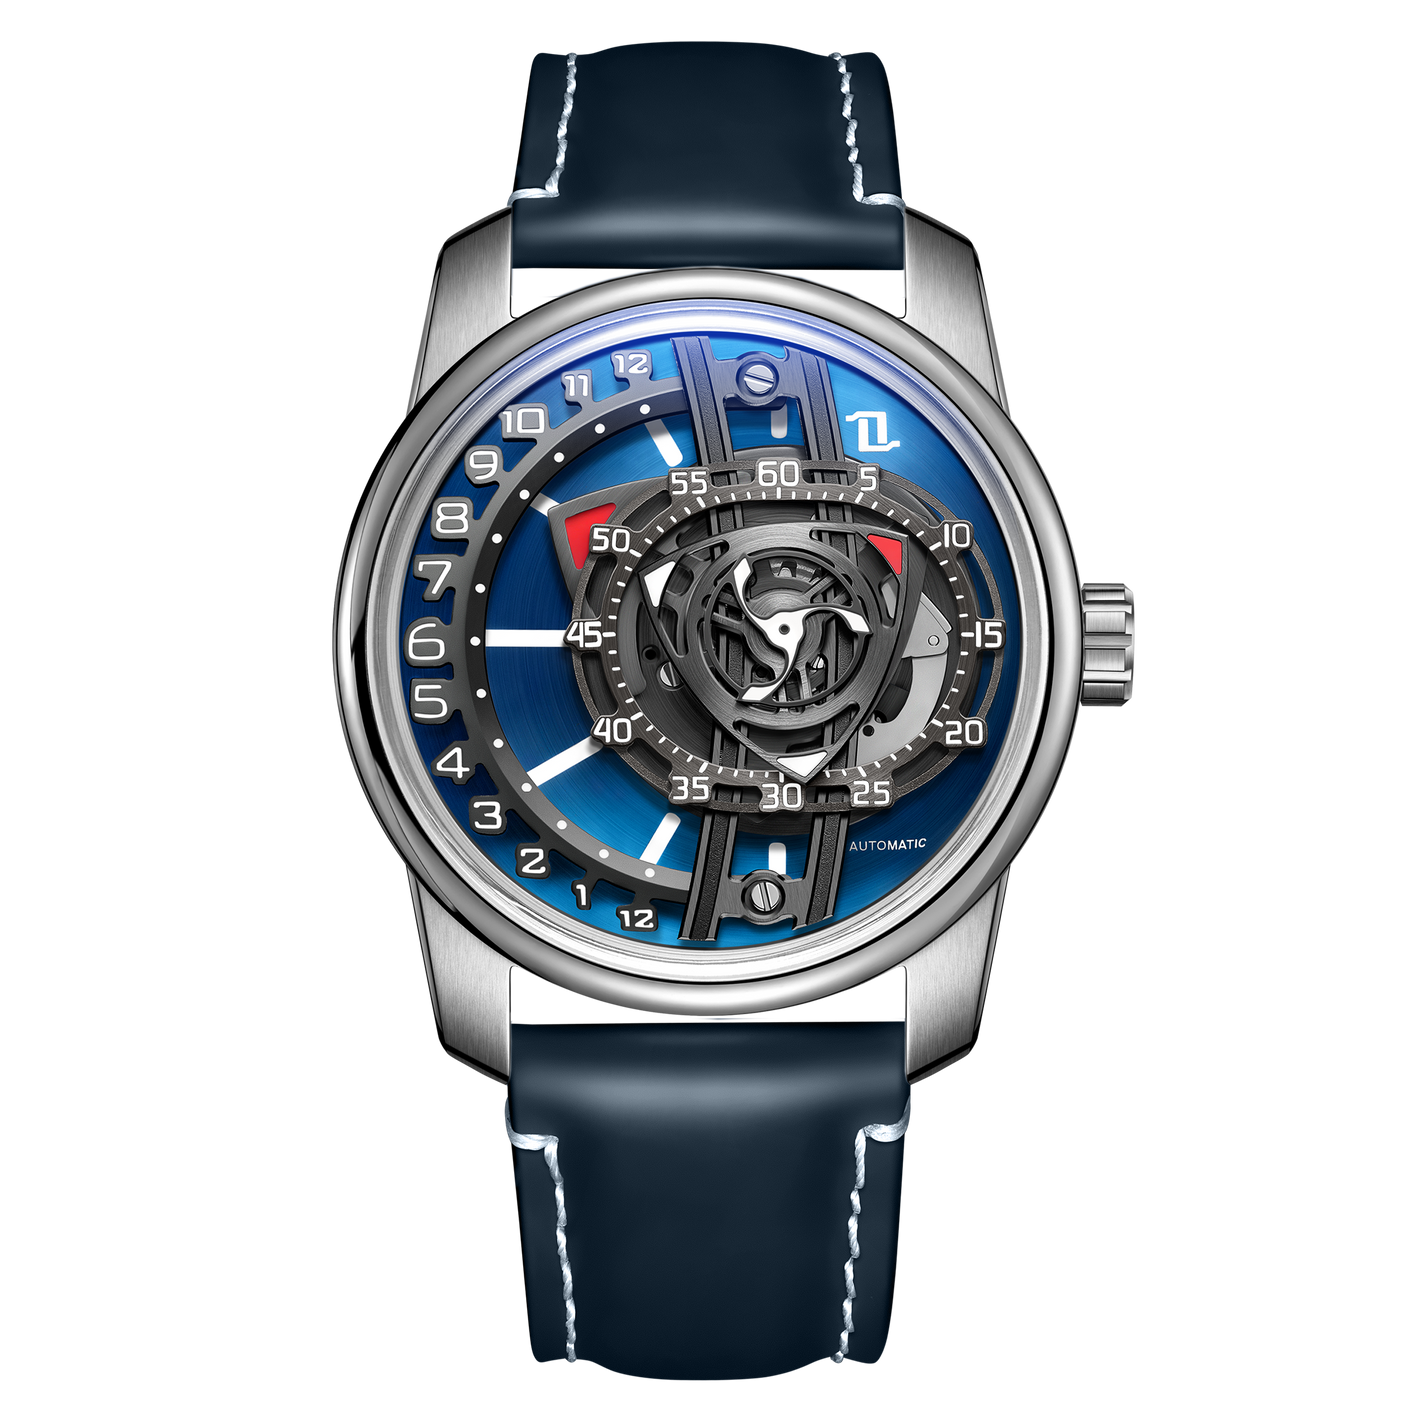 Luxury Men's Automatic Unique Skeleton Watch - OBLVLO JM ROTOR Series